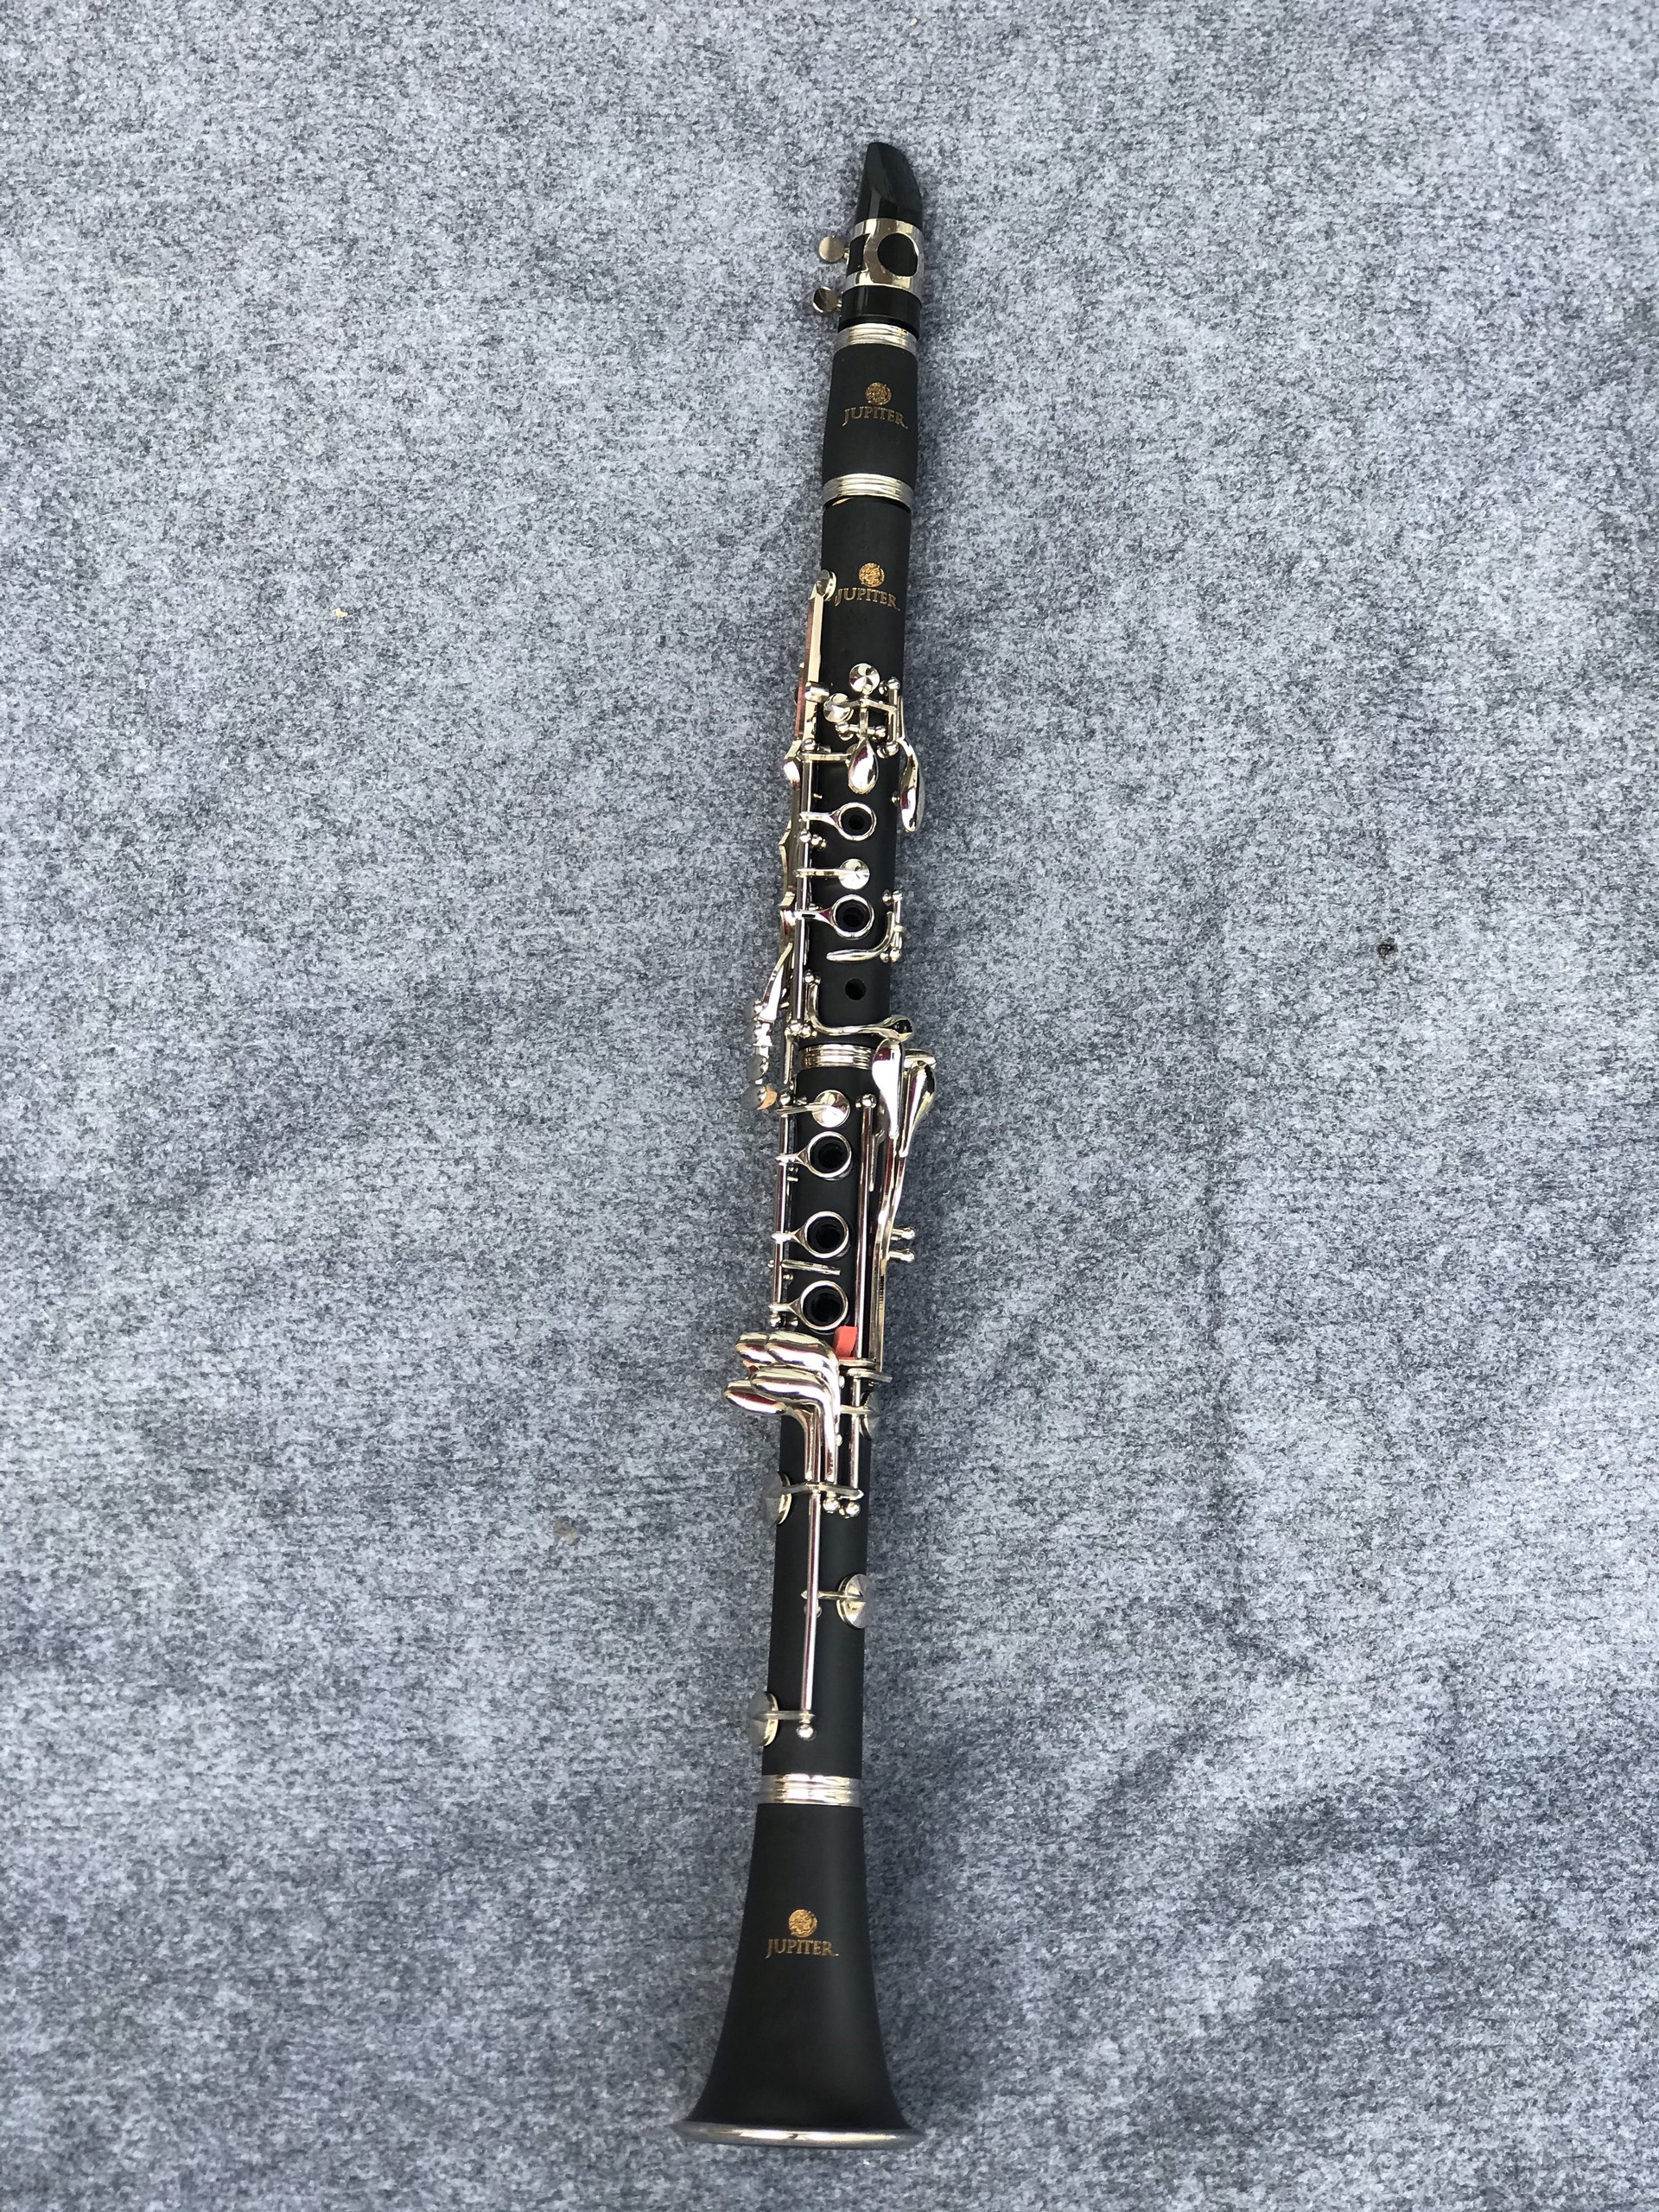 Kèn Clarinet Jupiter JCL-700 màu đen